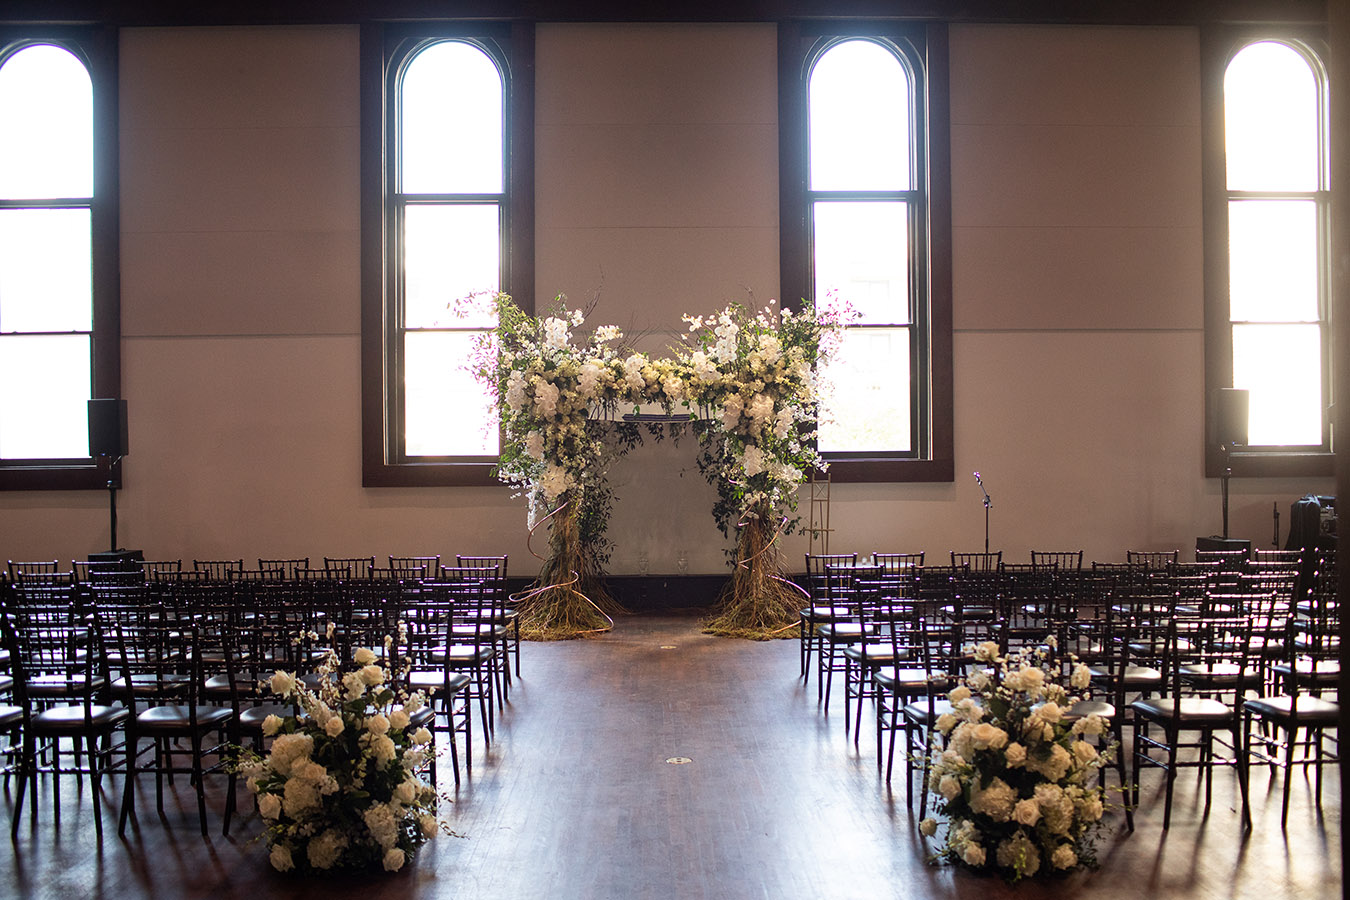 Wedding ceremony setup with Jewish chuppah adorned with flowers